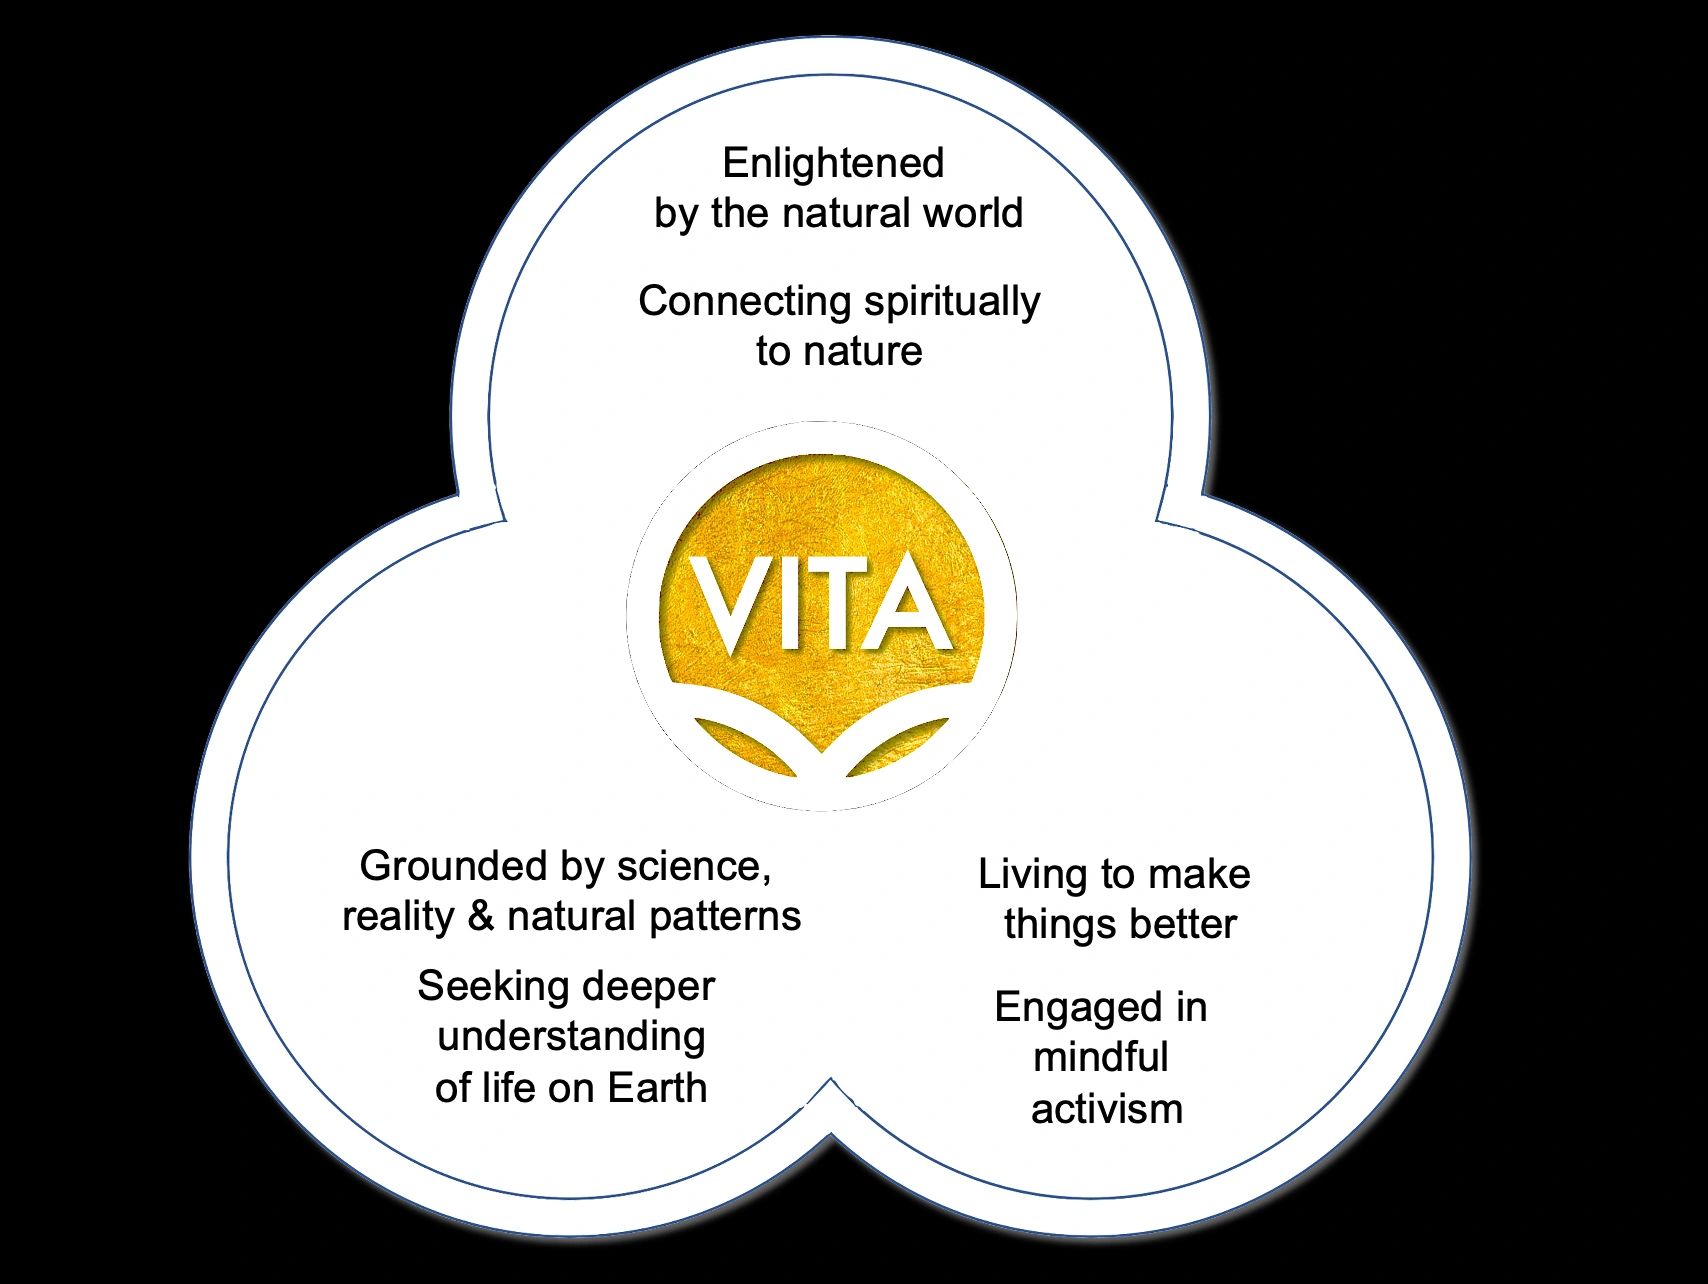 Vita's spiritual model called the Trimoeba see's eco-spirituality composed of three elements.